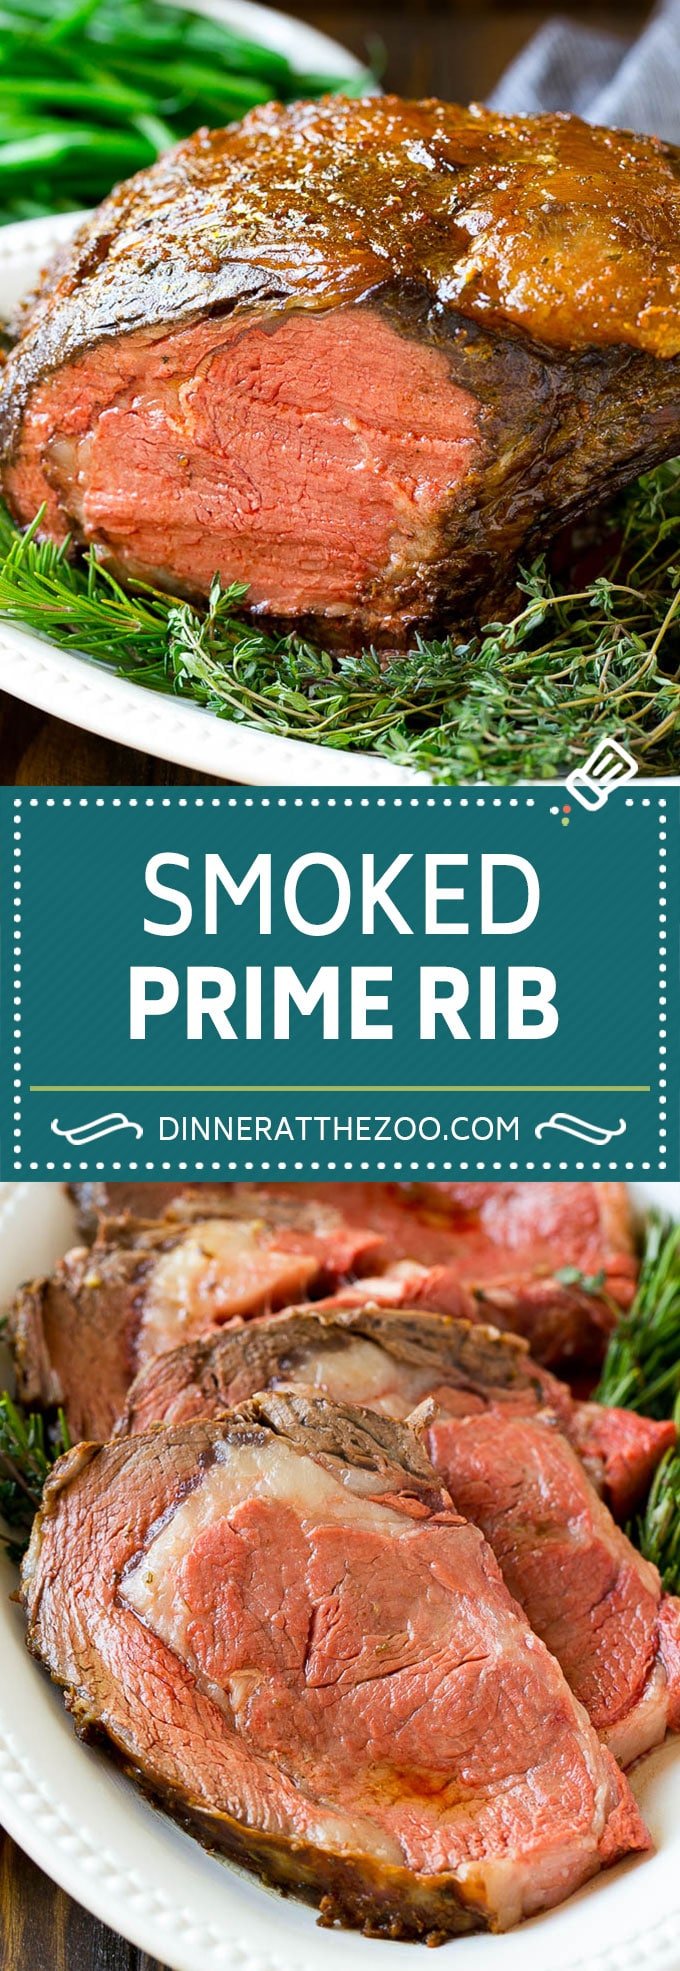 Smoked Prime Rib Recipe | Easy Prime Rib | Smoked Beef | Holiday Prime Rib #primerib #beef #smoker #dinner #dinneratthezoo #christmas #thanksgiving #lowcarb #keto